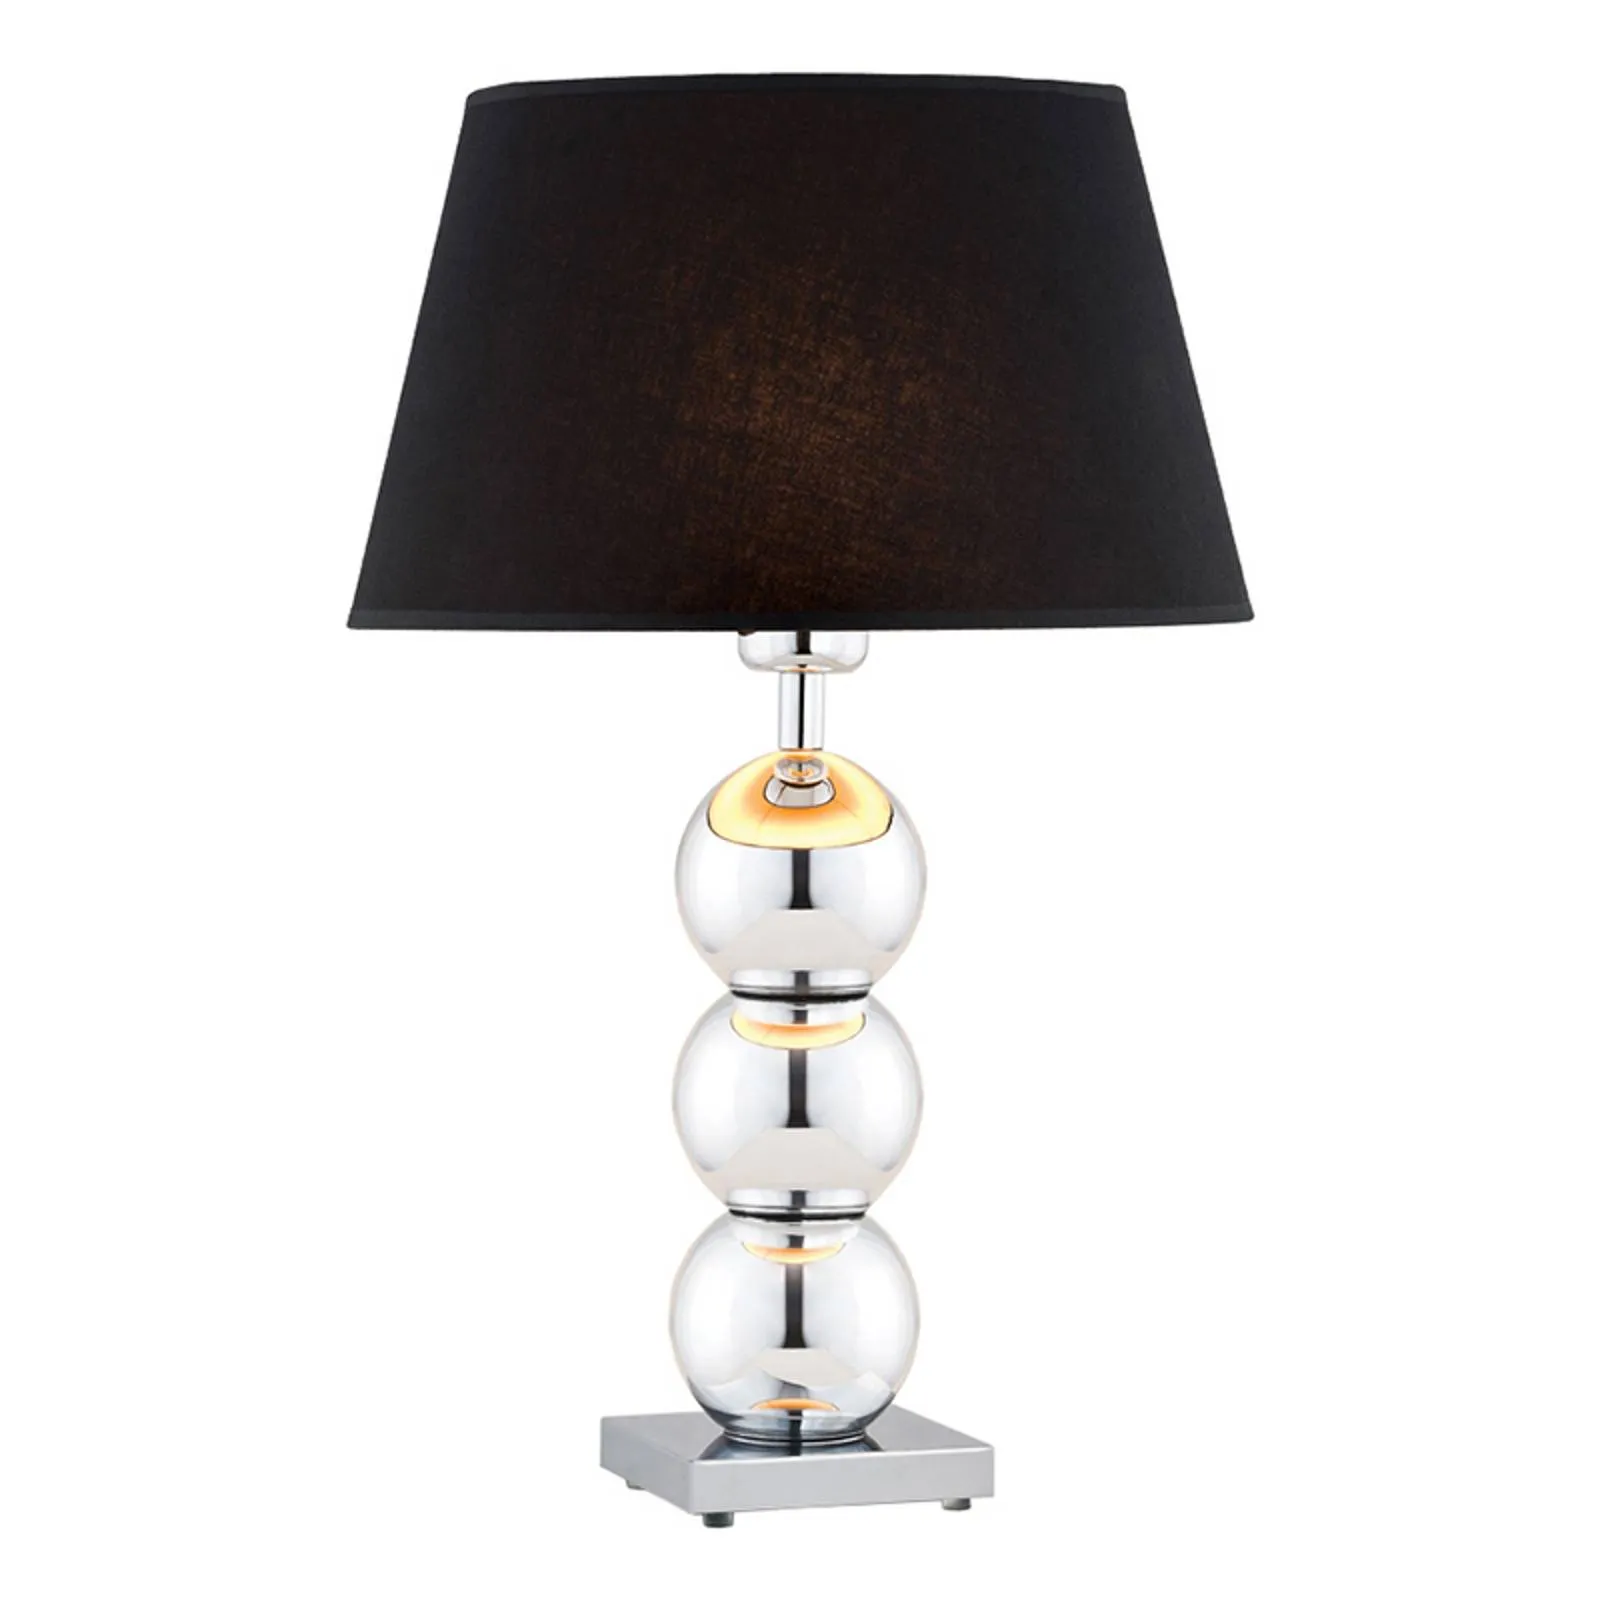 Fulda table lamp, black lampshade, chrome base